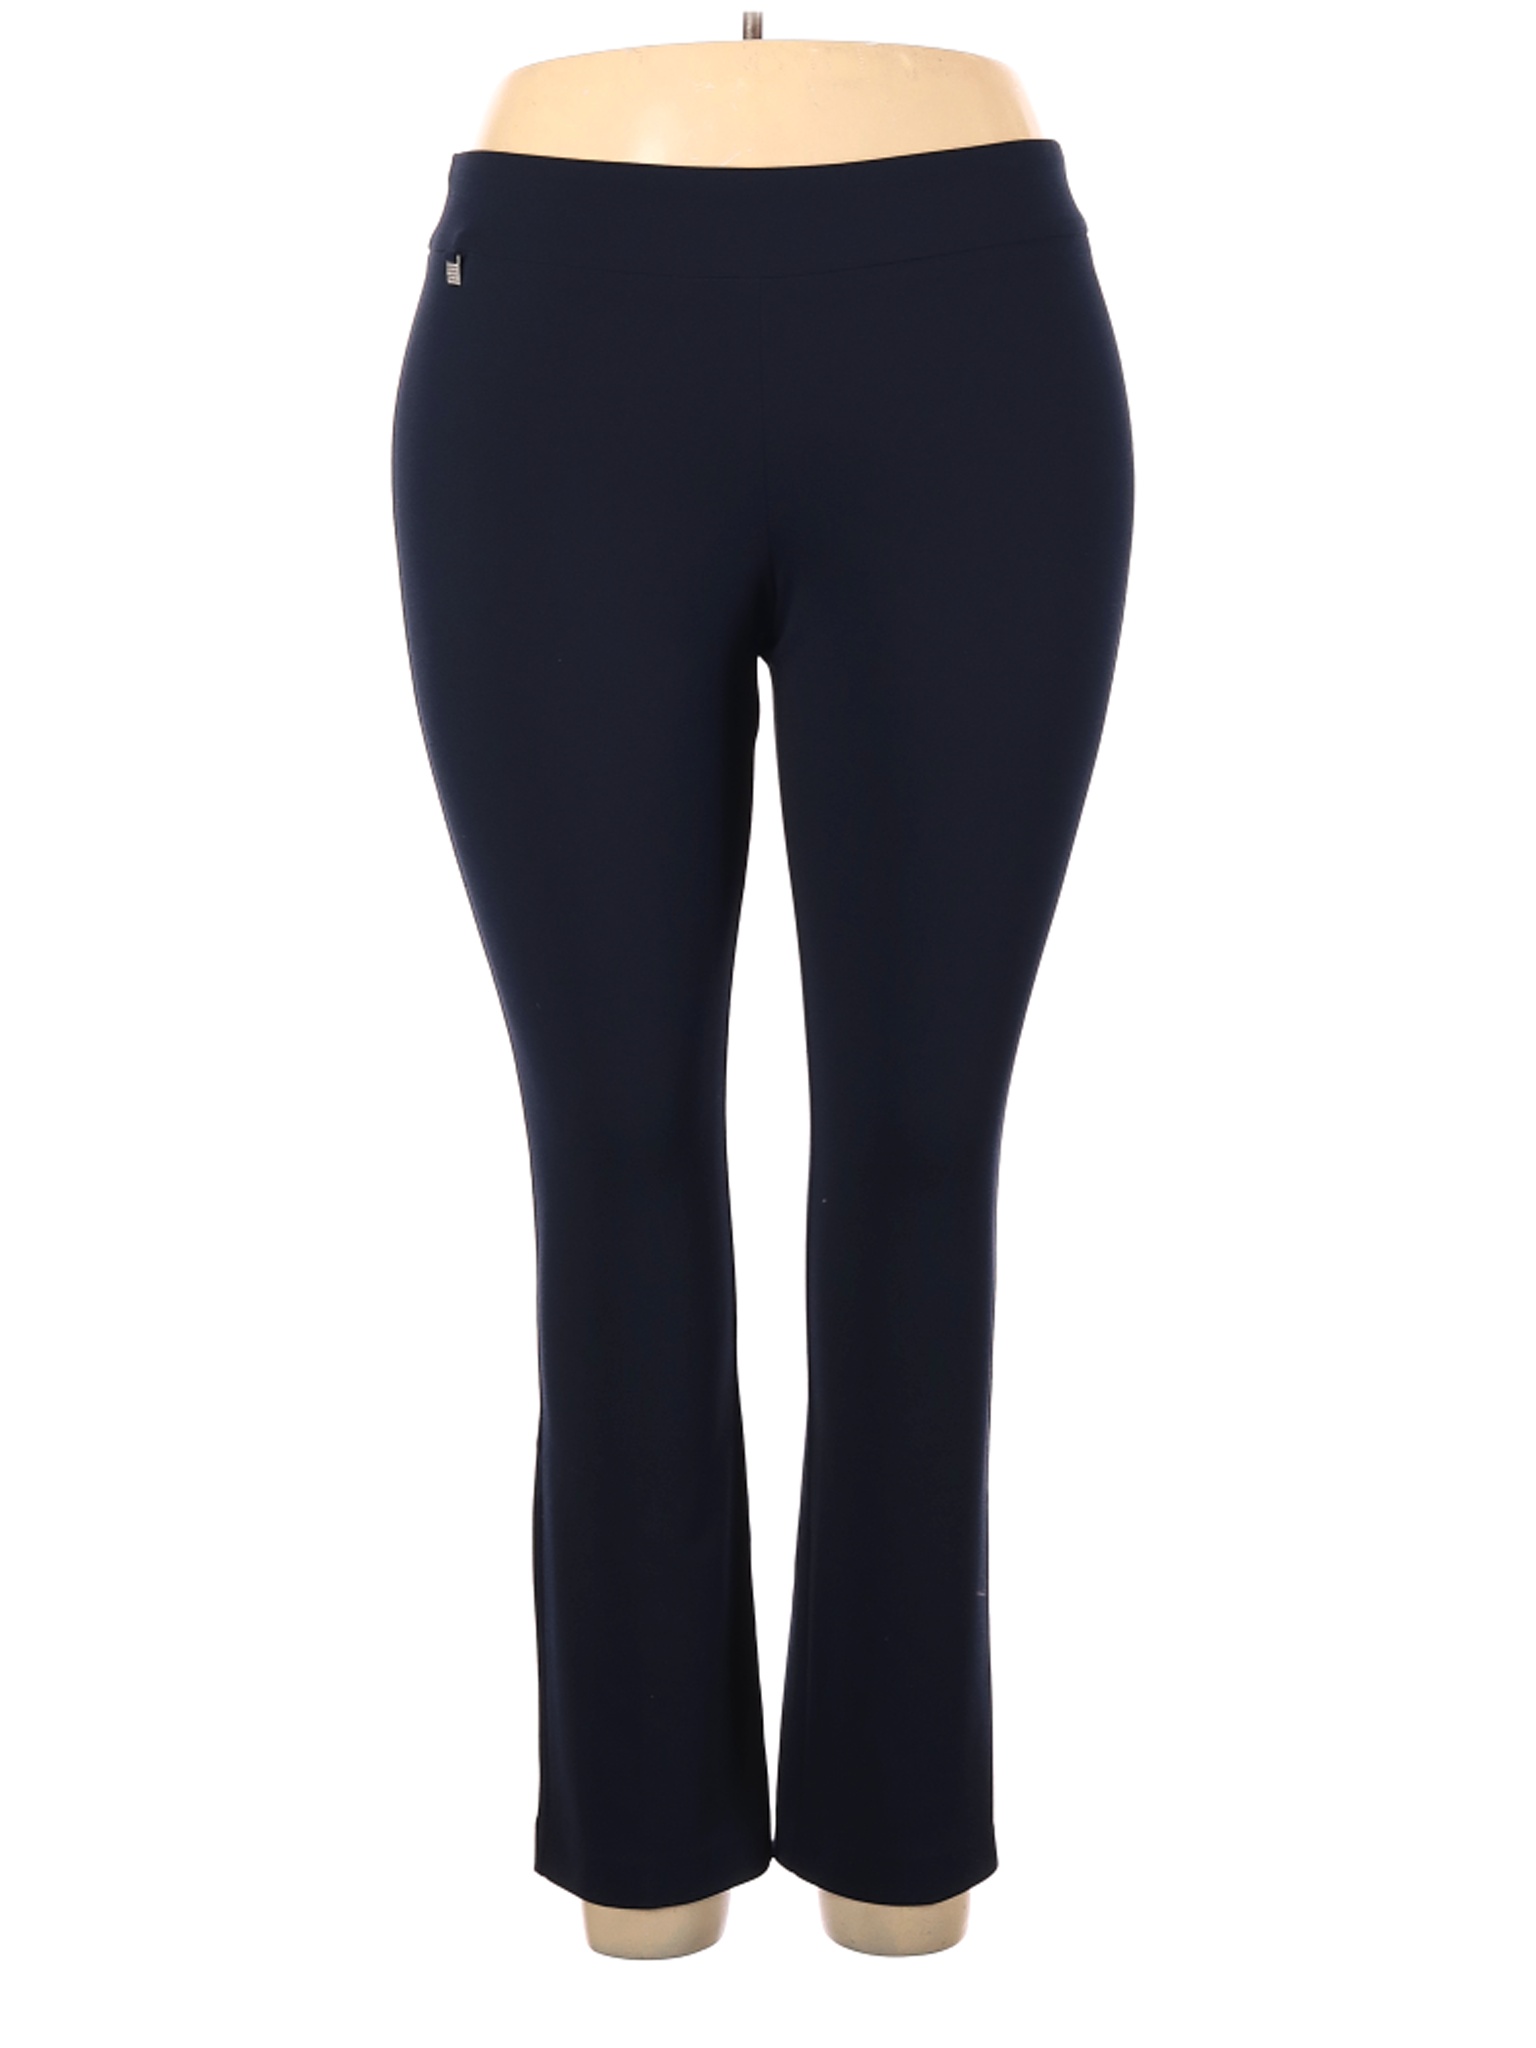 SOHO Apparel Ltd Women Blue Dress Pants XL | eBay